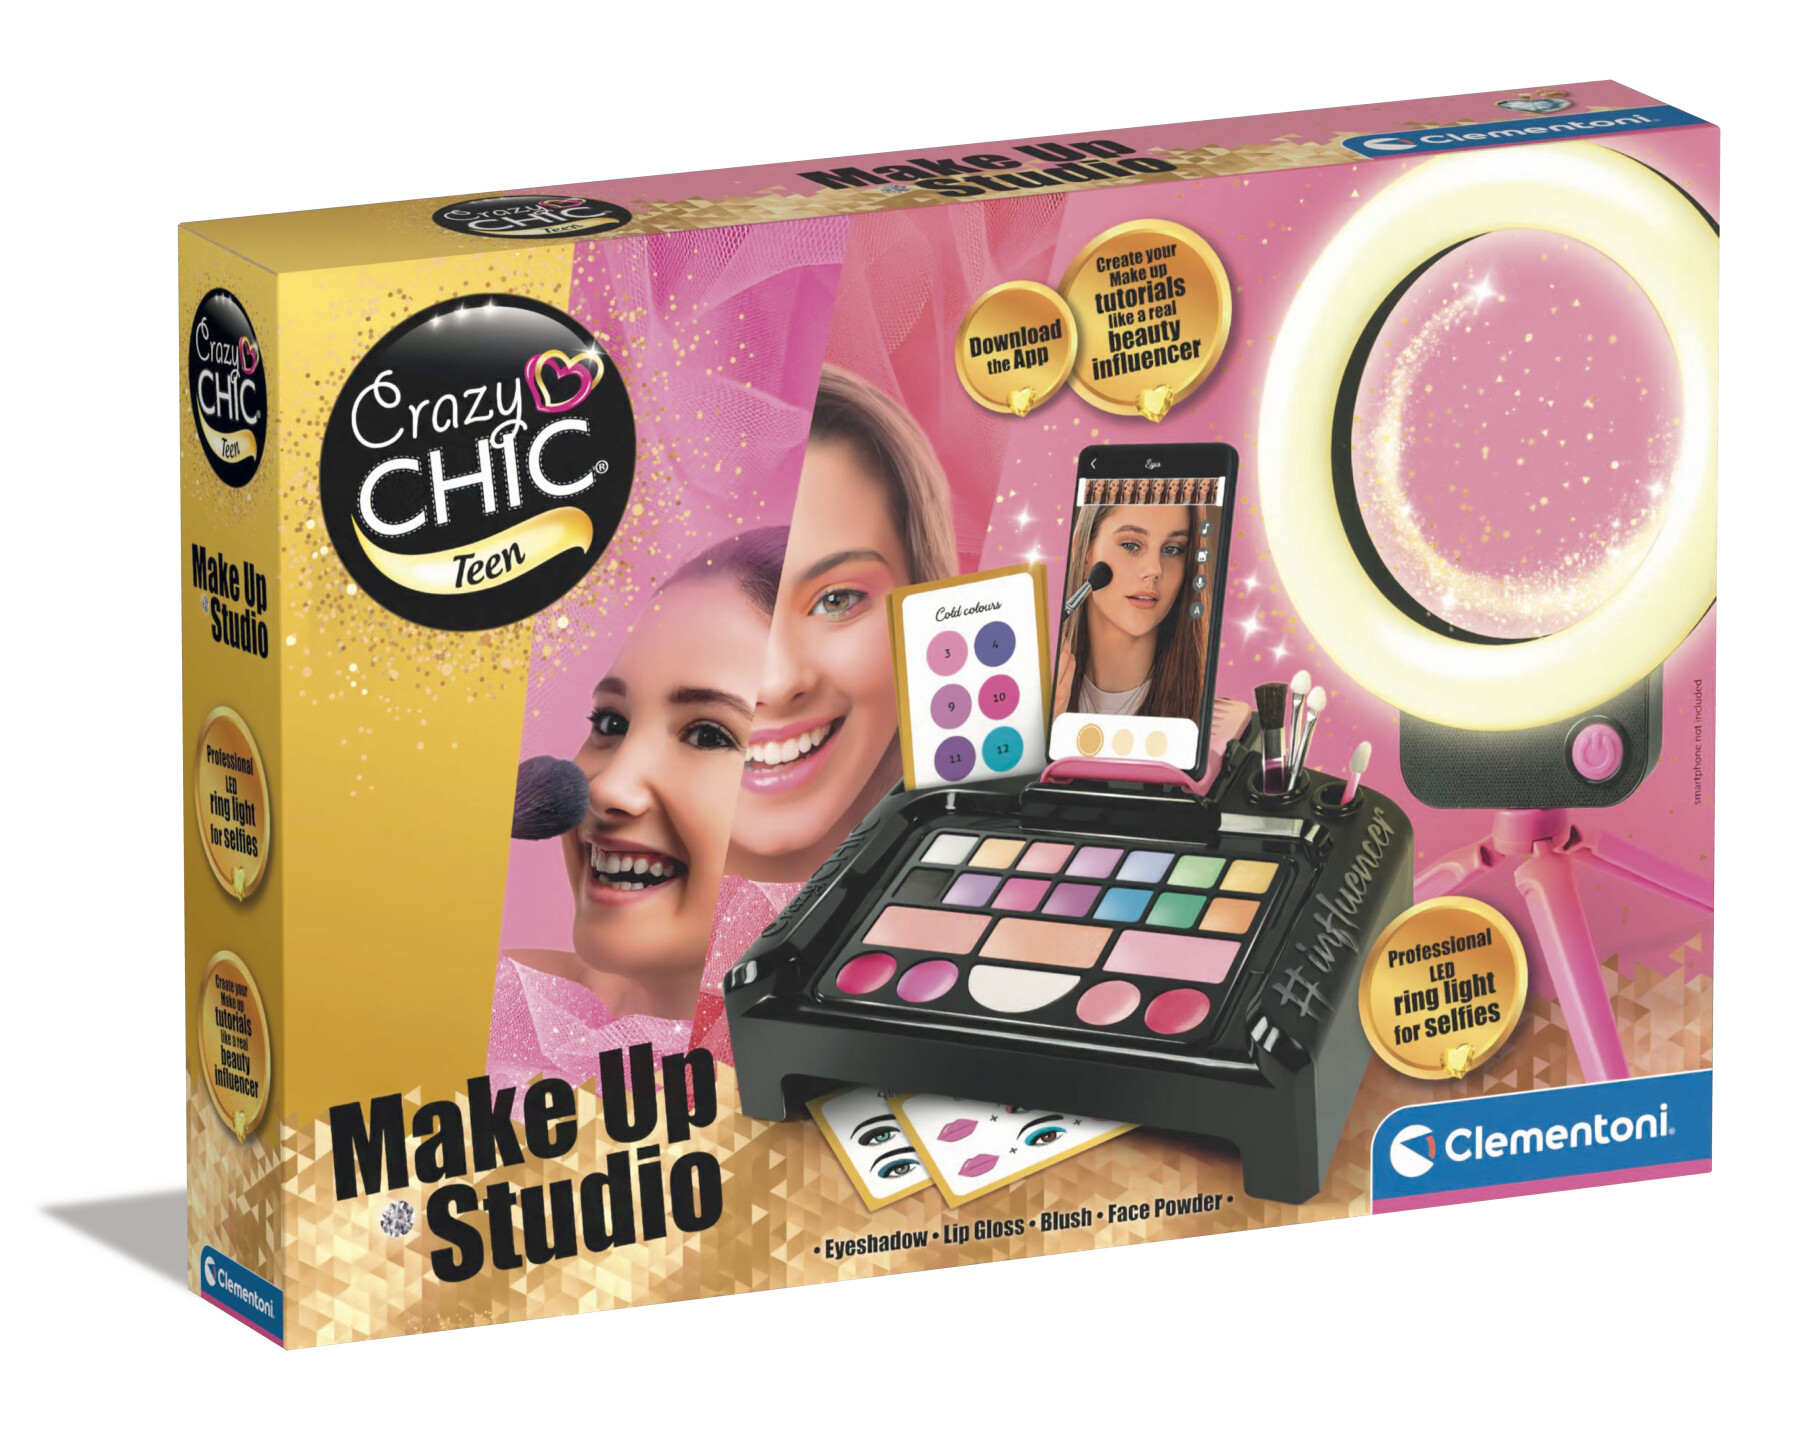 Crazy chic make up studio - CRAZY CHIC